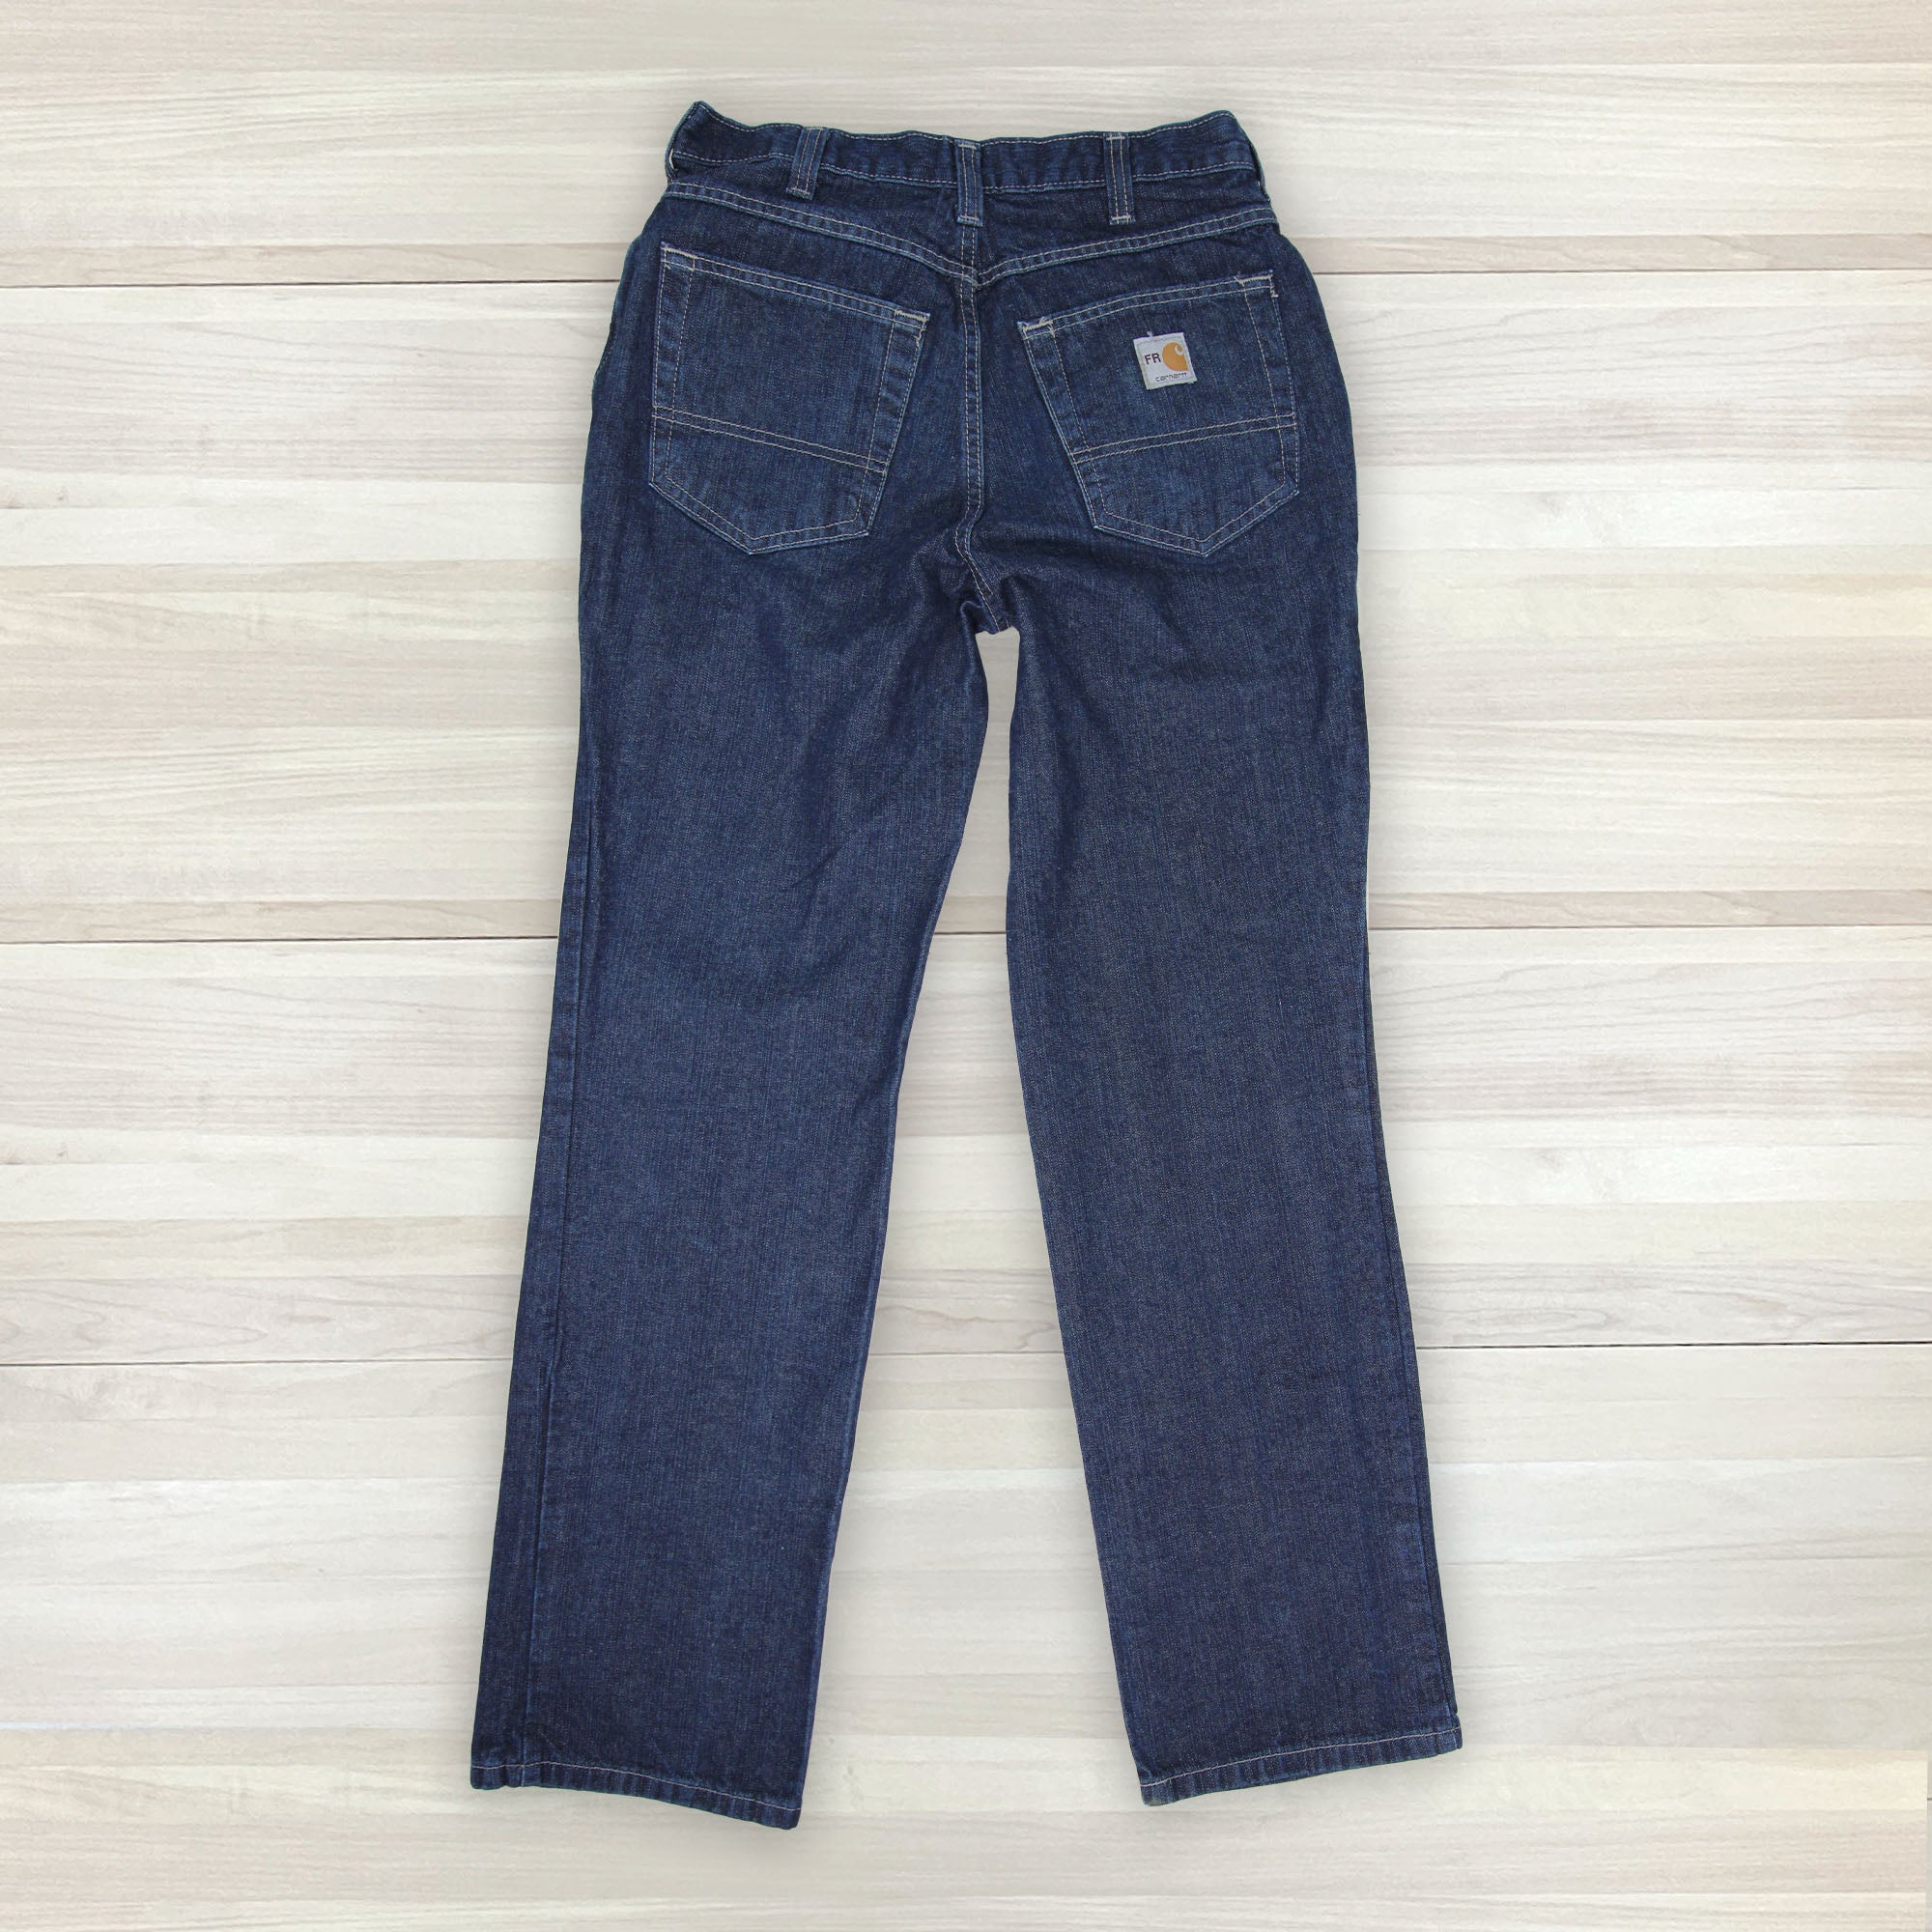 Men's Carhartt FR Flame Resistant Jeans - Measures 28x31